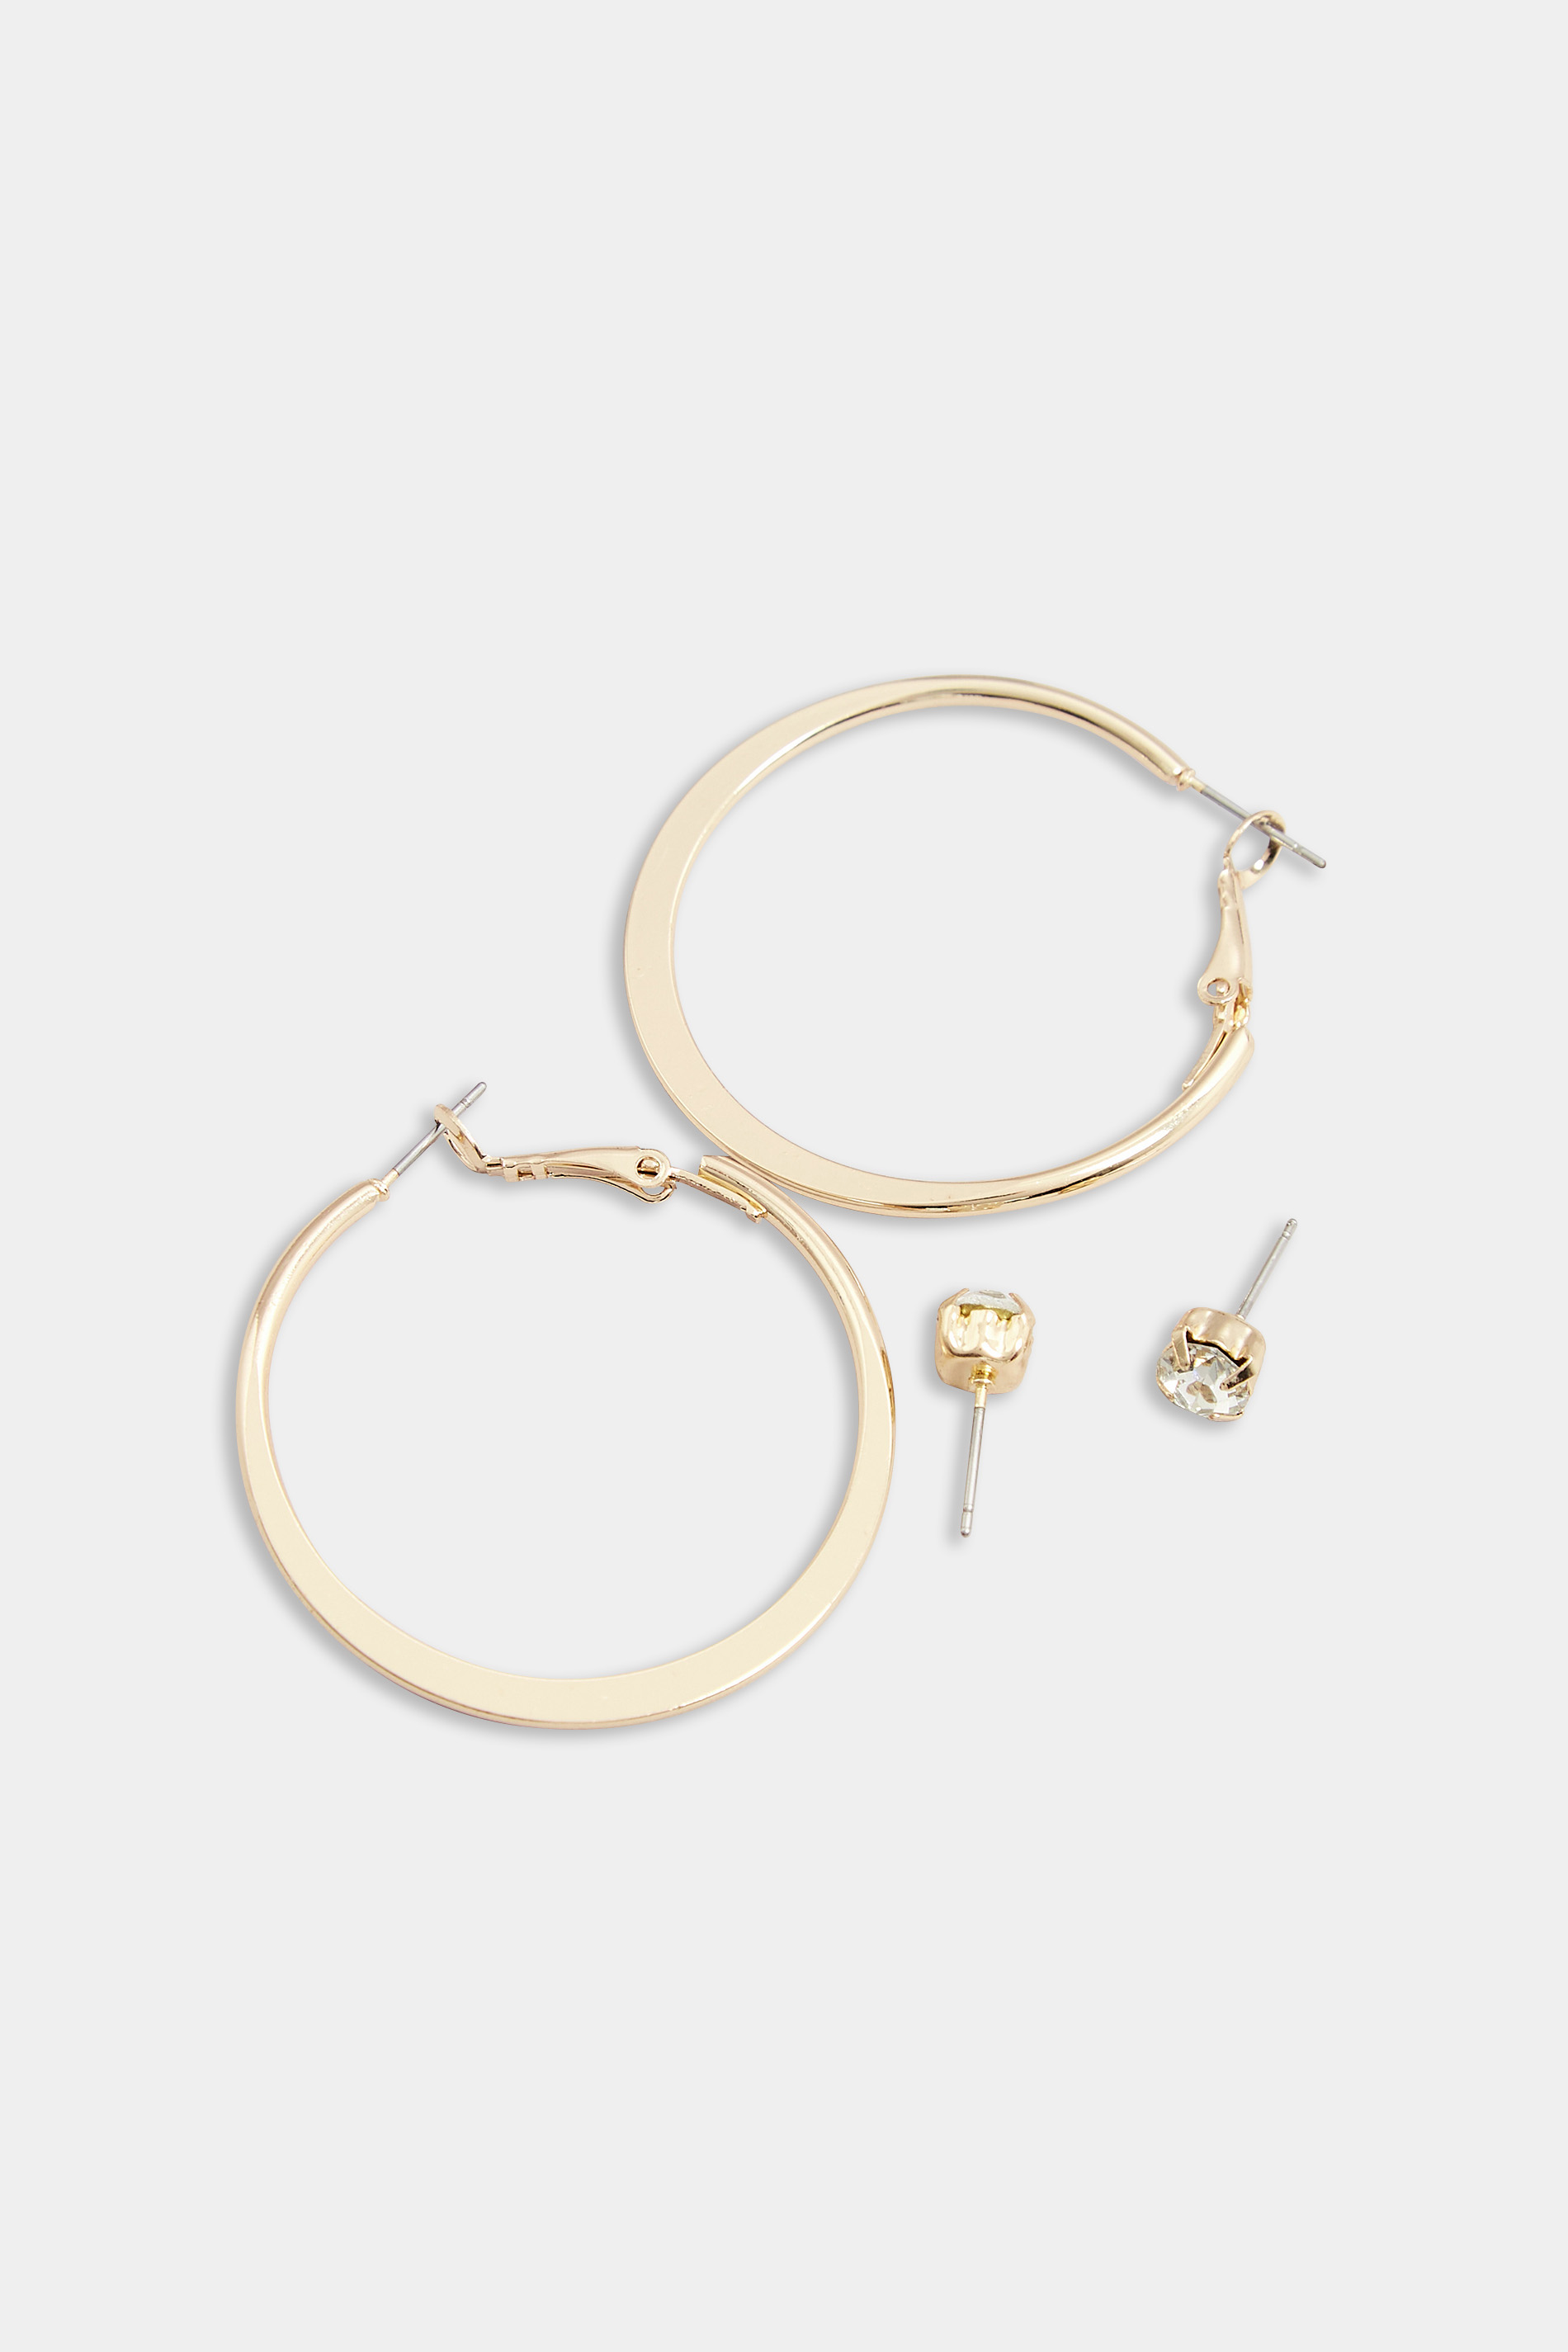 2 PACK Gold Hoop & Stud Earrings Set | Yours Clothing  3